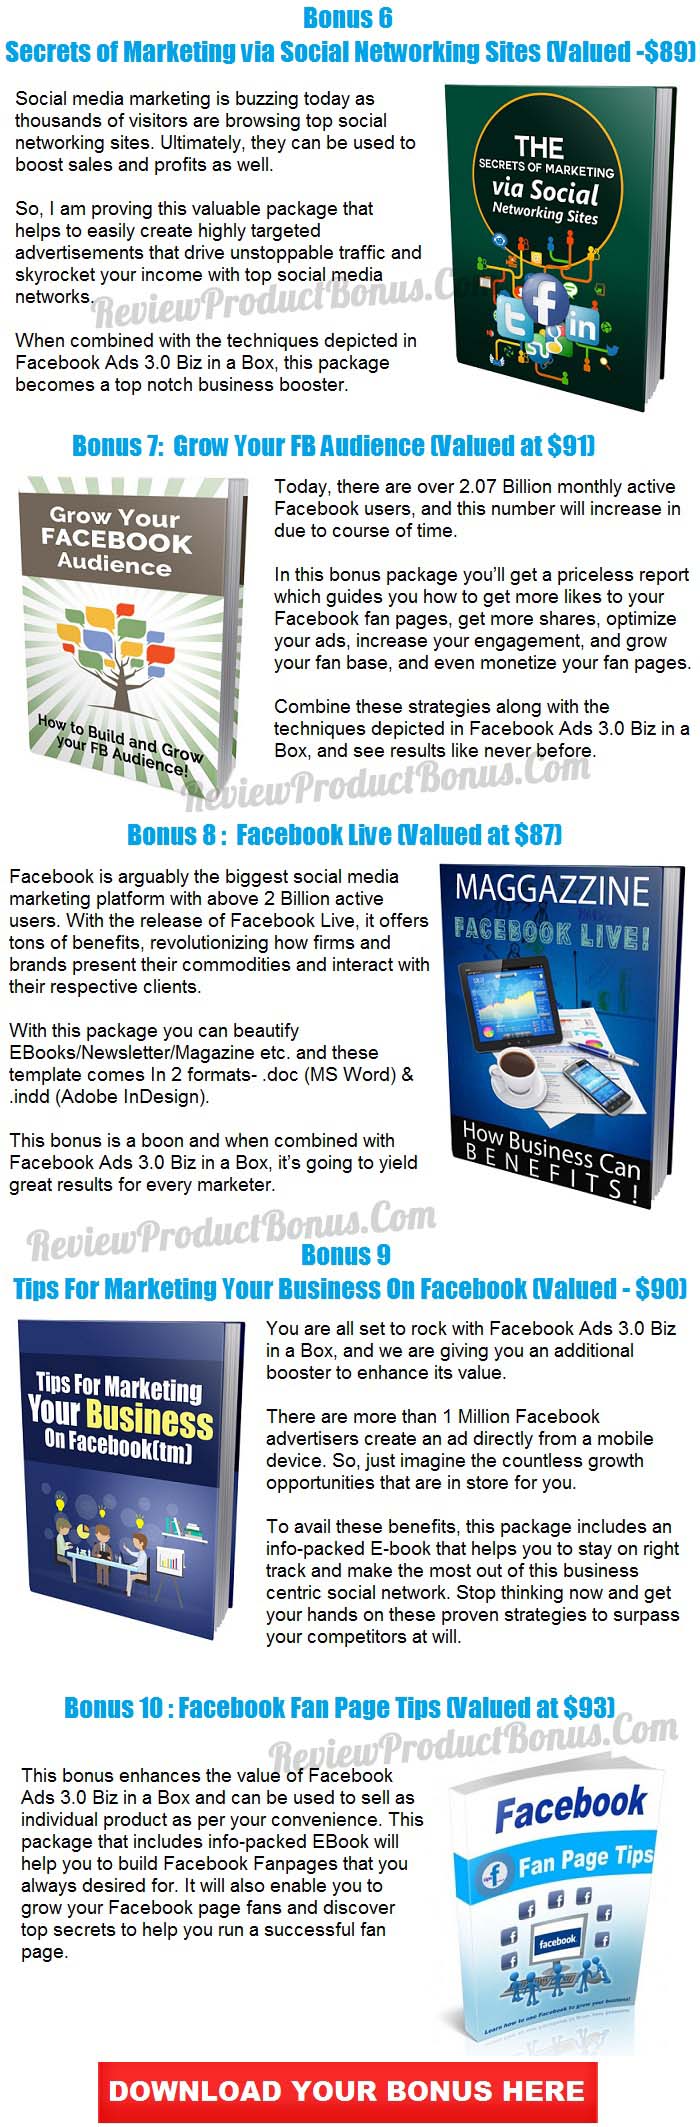 Facebook Ads 3.0 Made Easy Bonuses